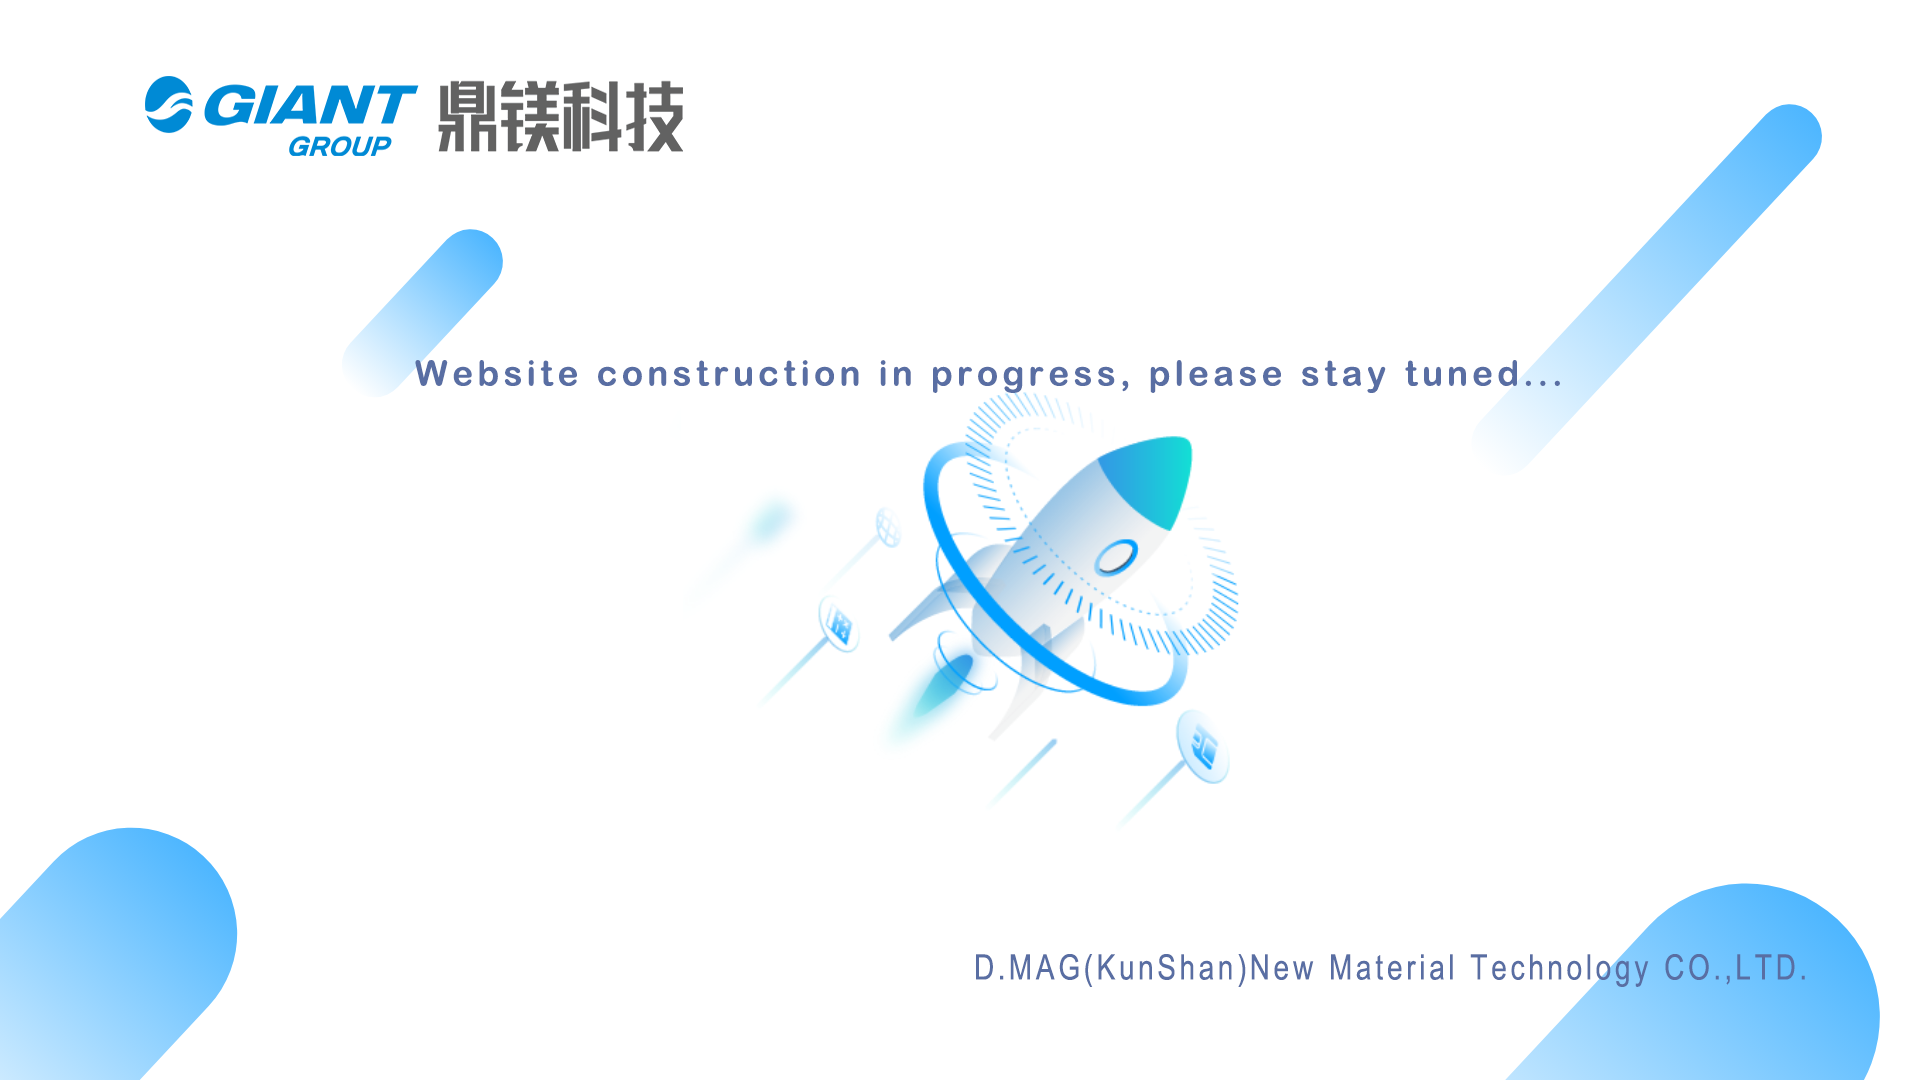 Website construction in progress, please stay tuned...